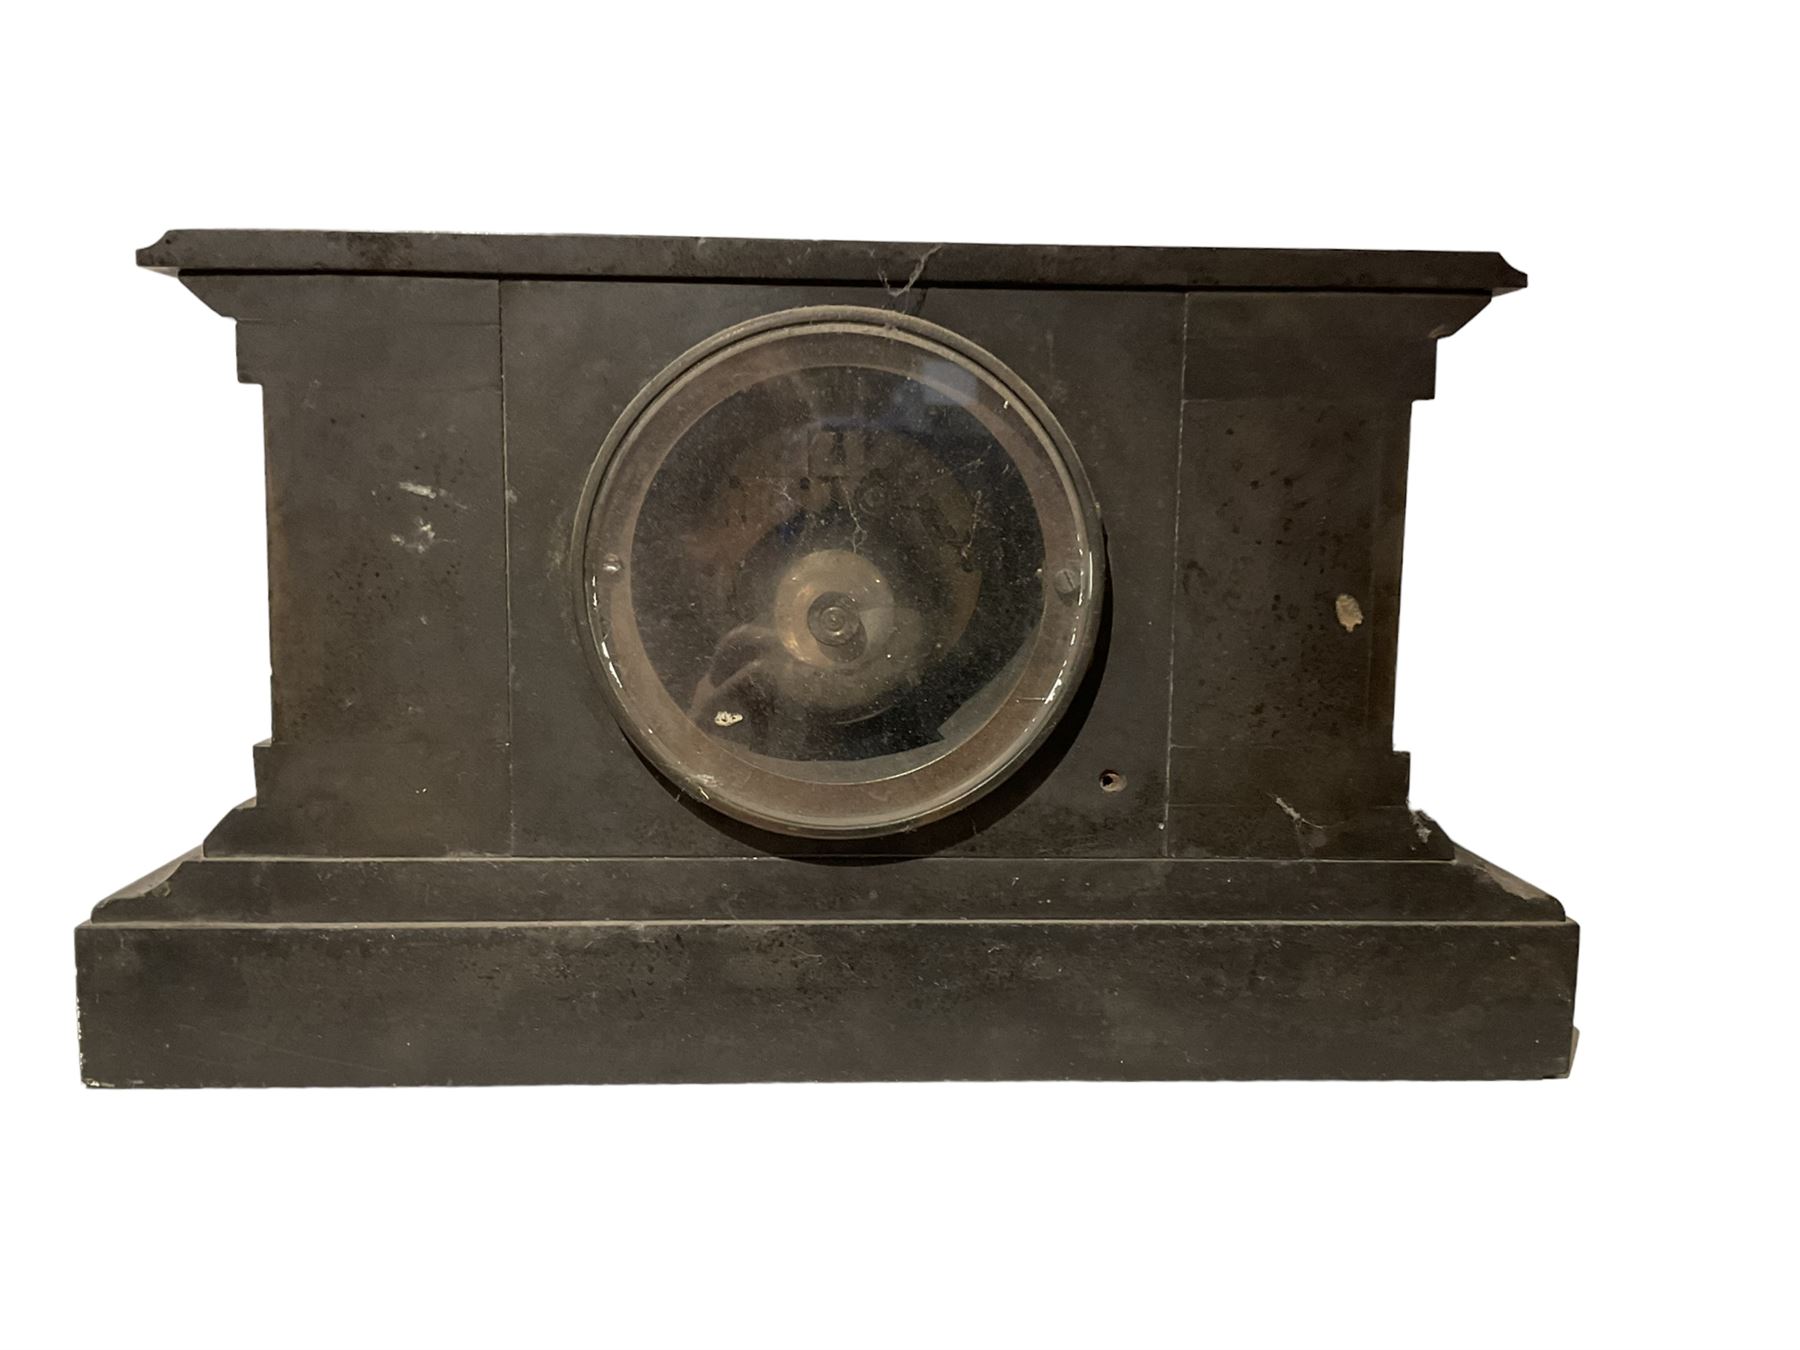 French - Belgium slate 19th century 8-day striking mantle clock - Image 3 of 3